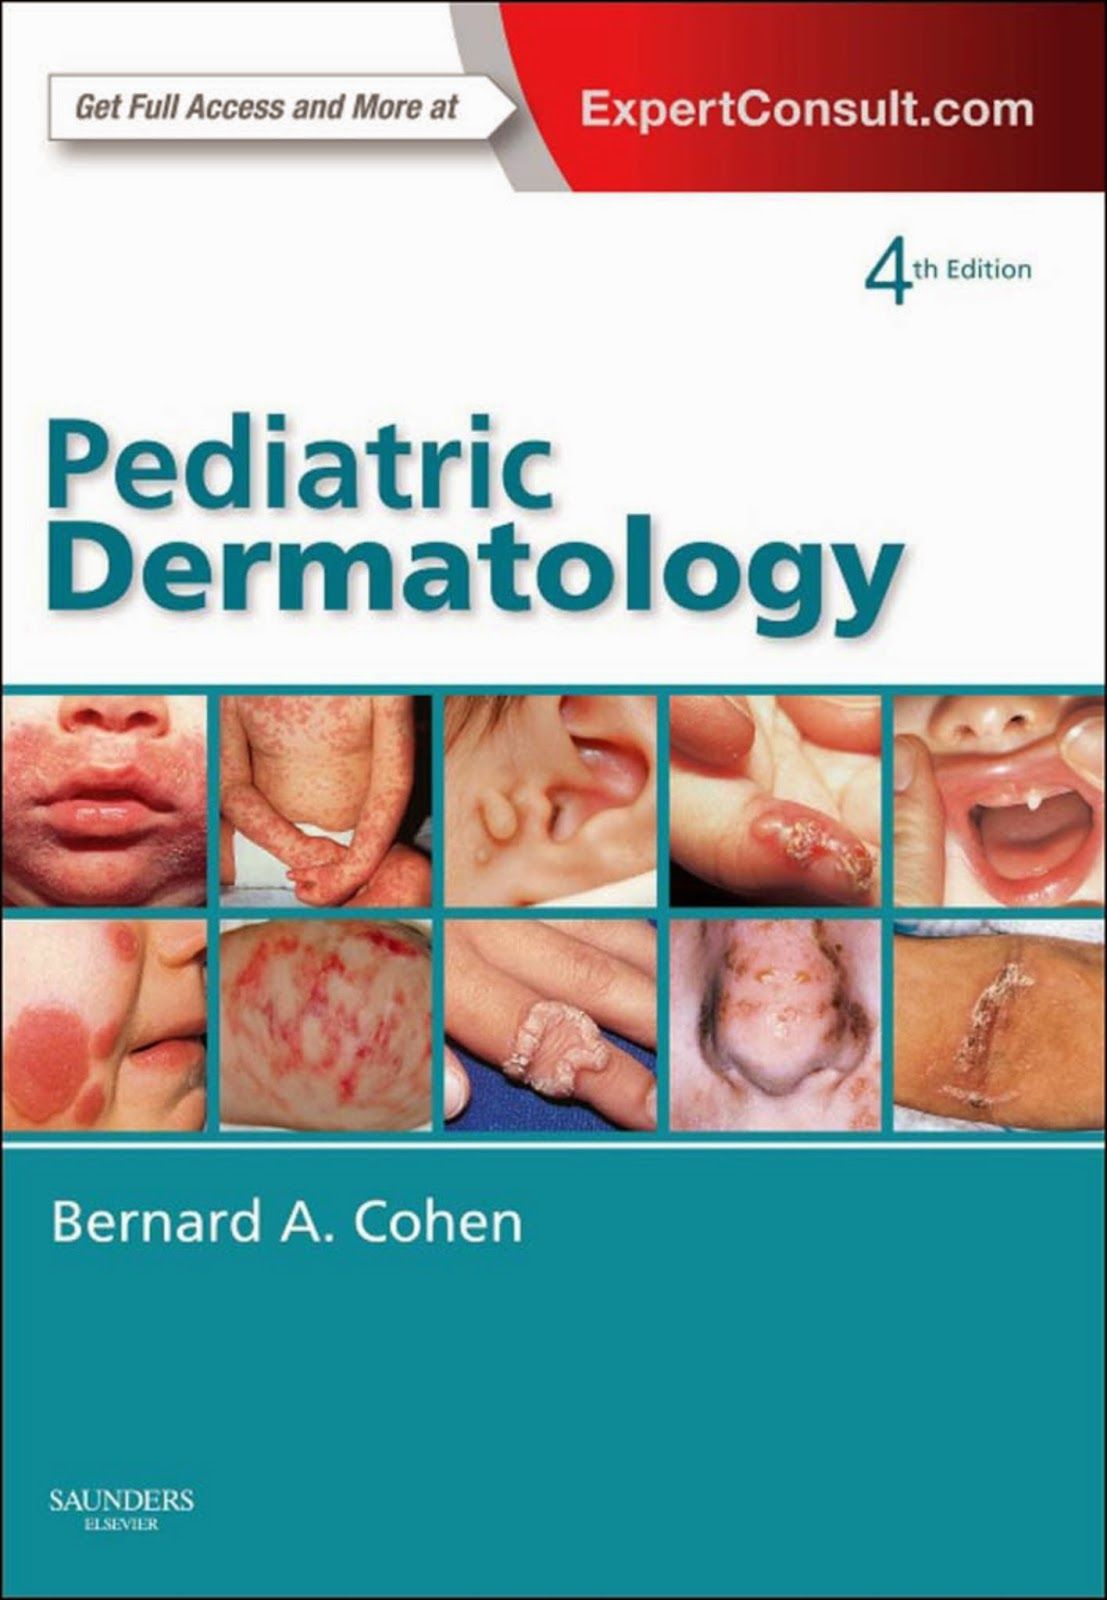 Bolognia Dermatology 3rd Edition Pdf